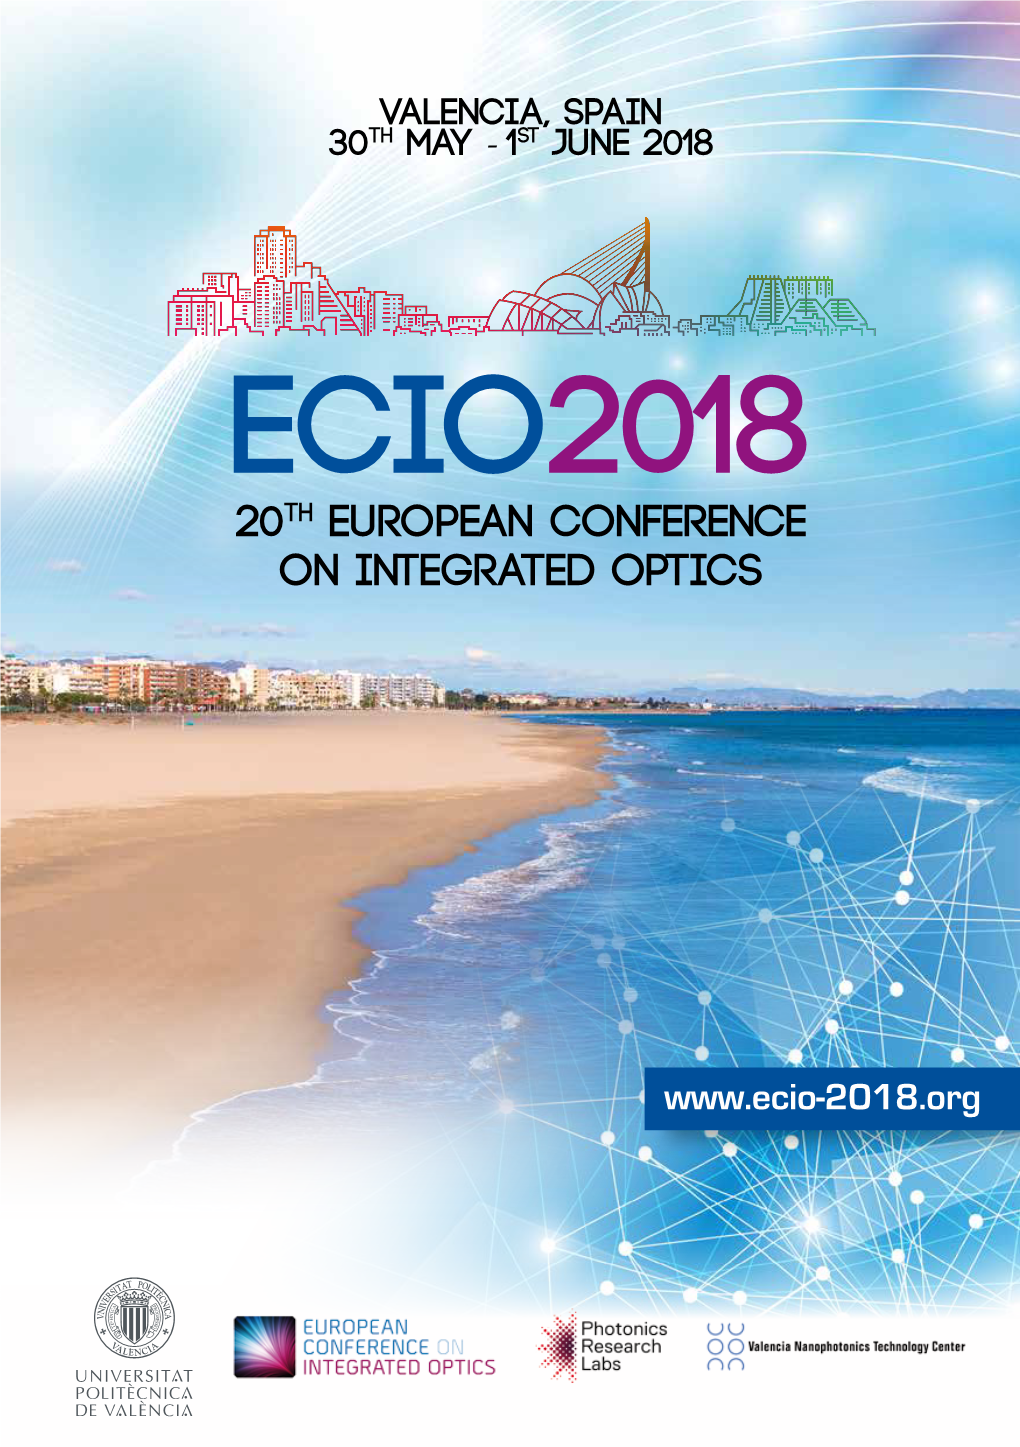 ECIO2018 20Th European Conference on Integrated Optics